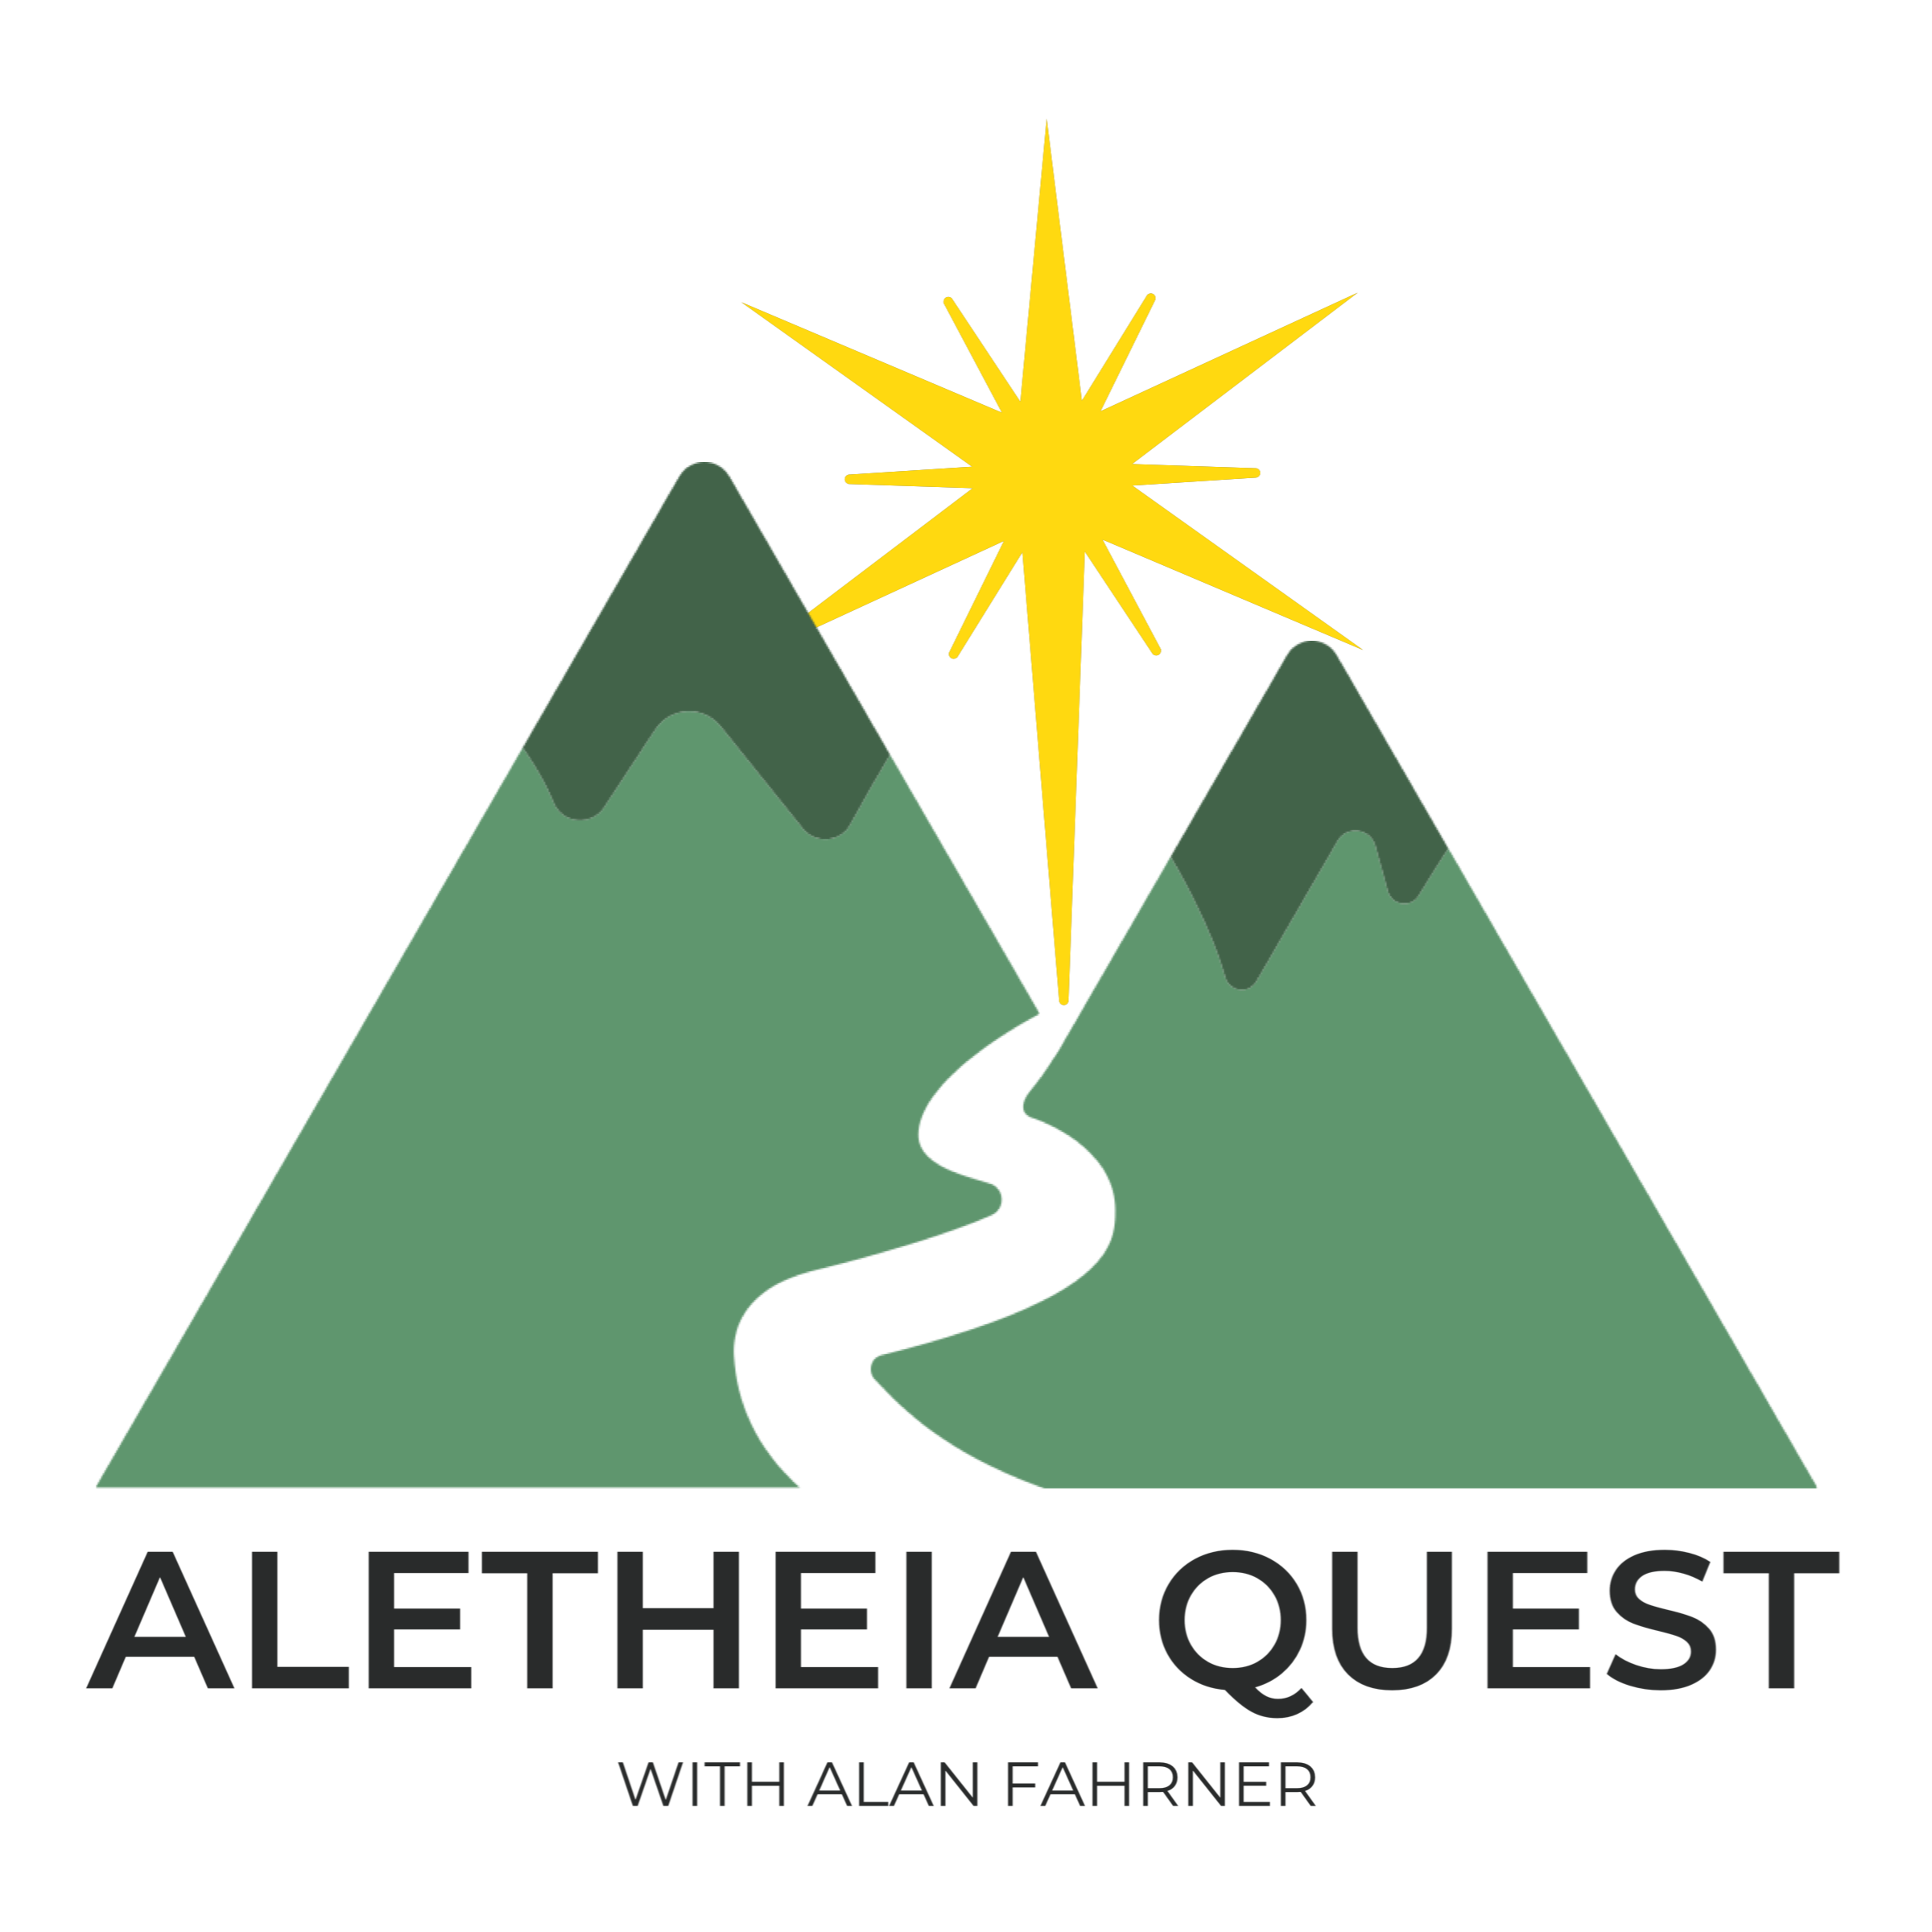 Altheia Quest logo.png